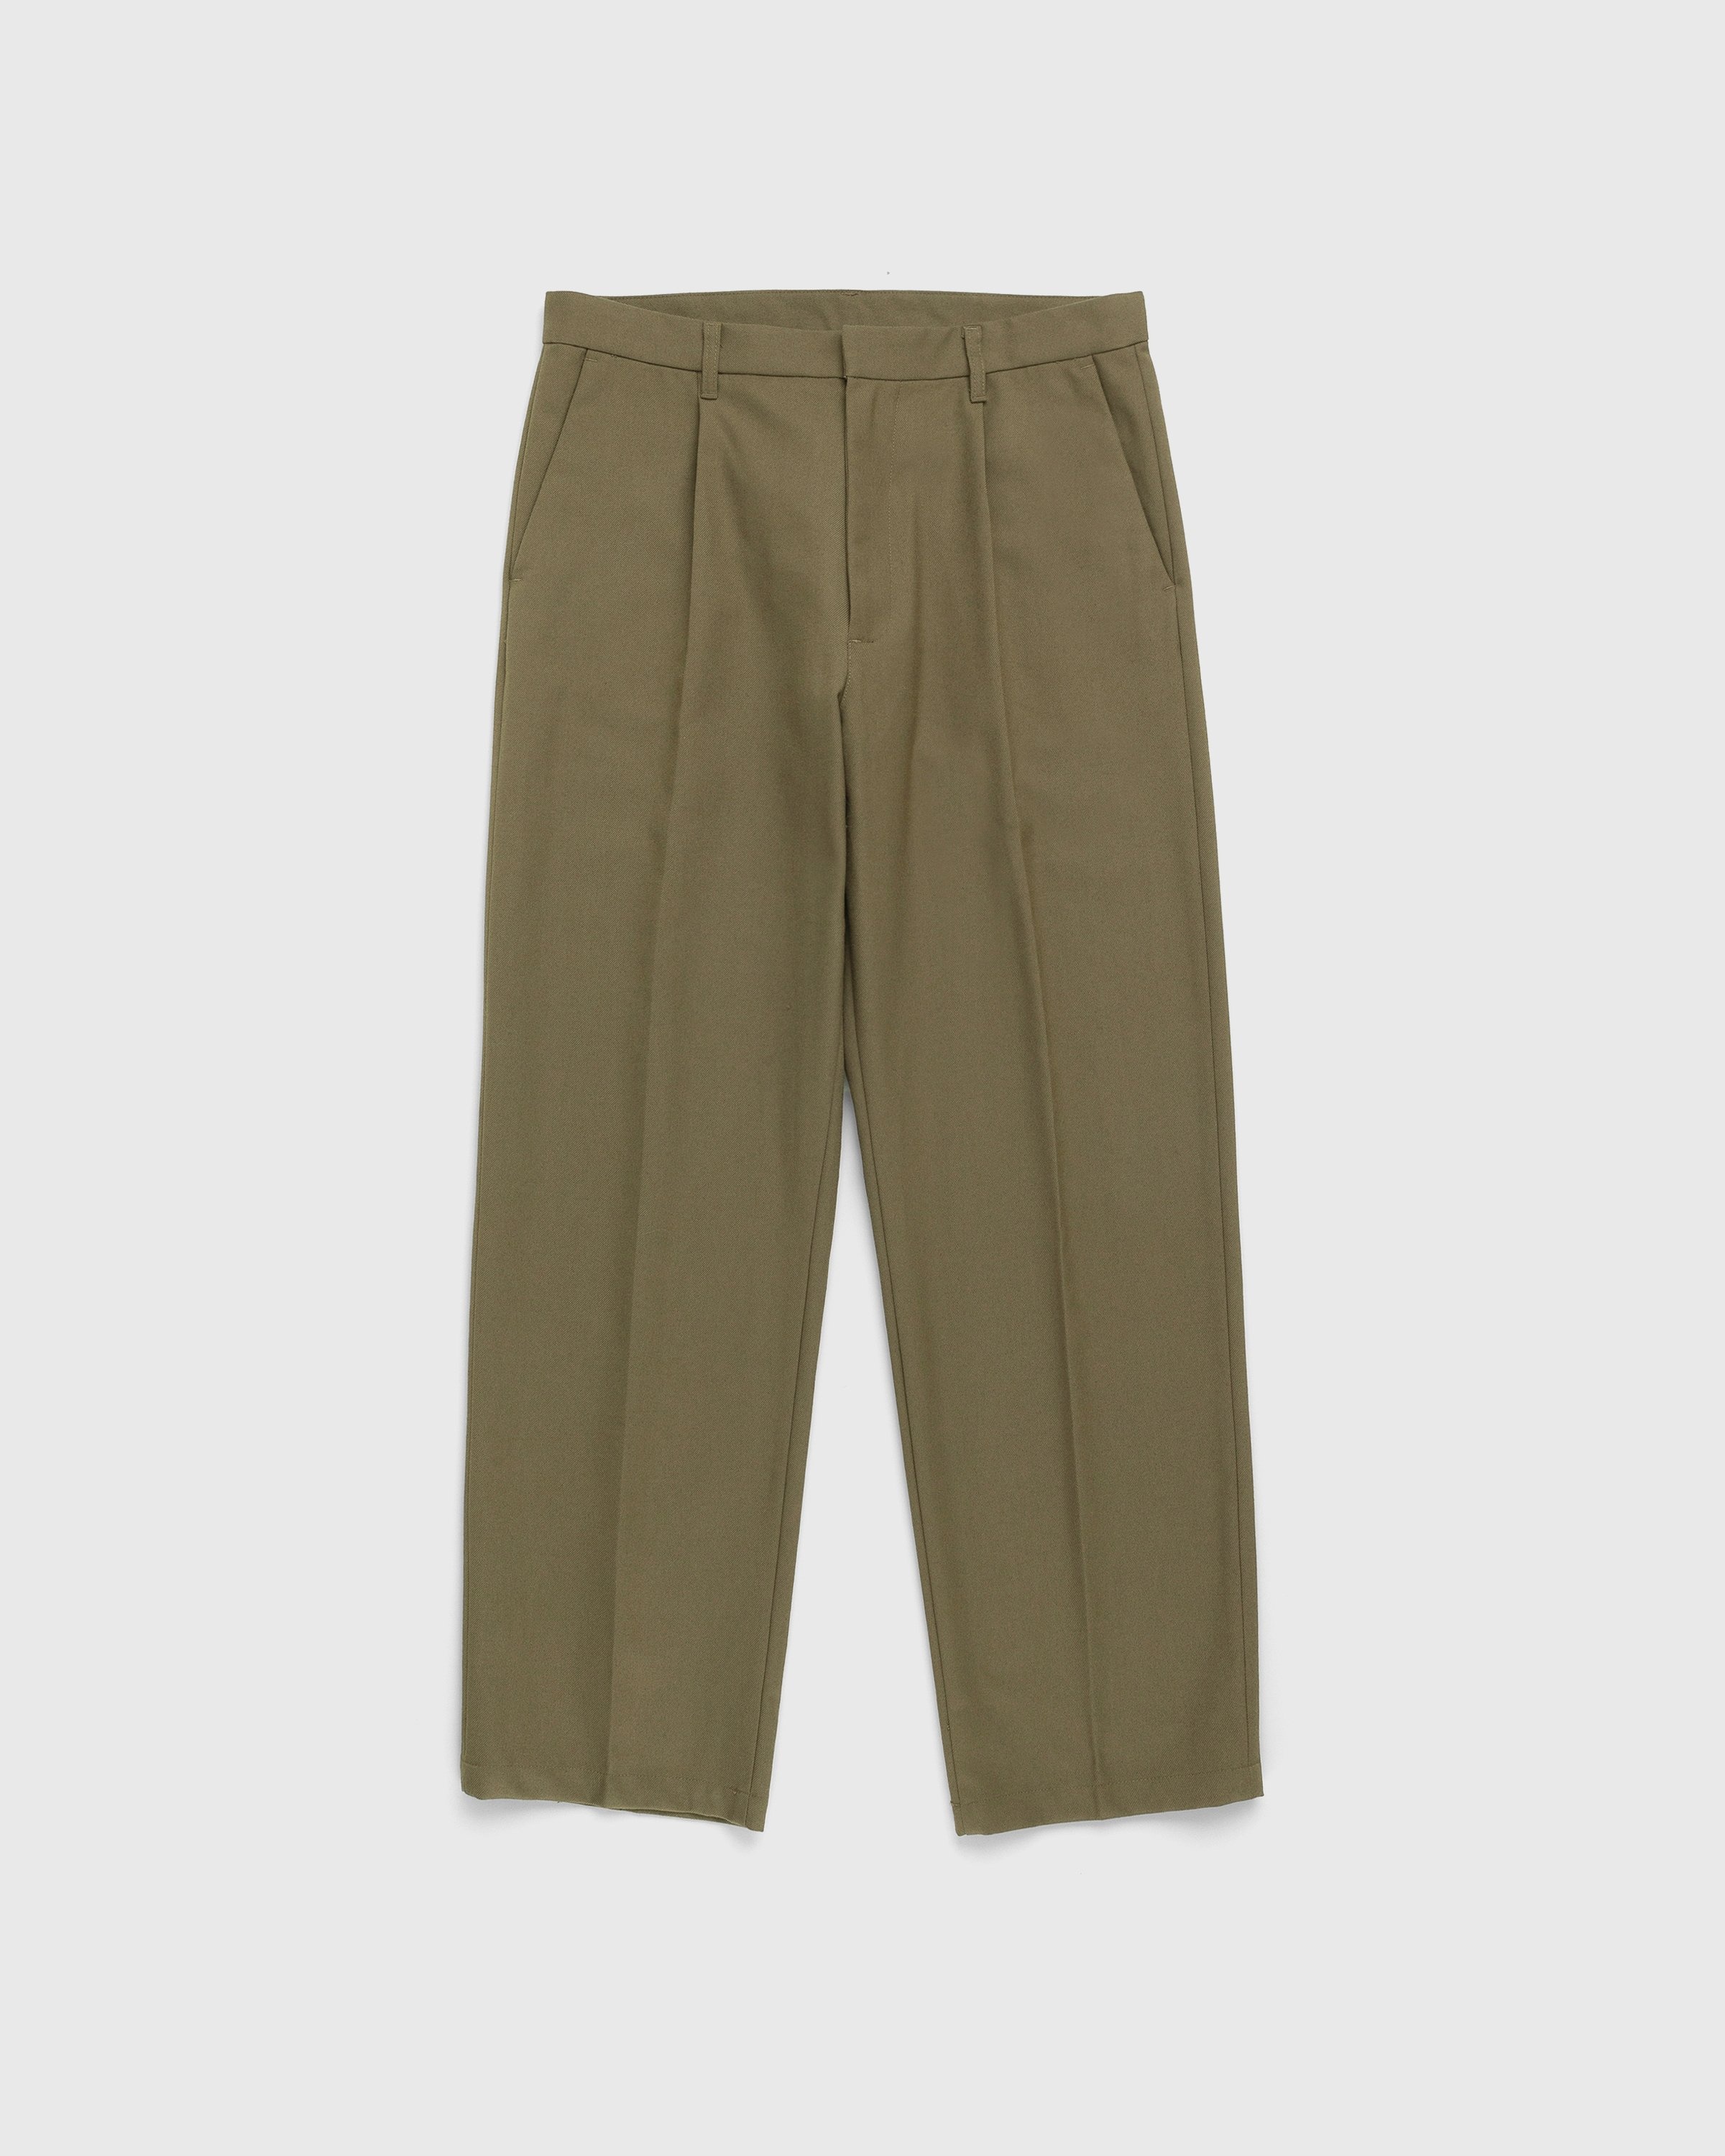 Highsnobiety – Heavy Wool Dress Pants Light Brown - Trousers - Brown - Image 1